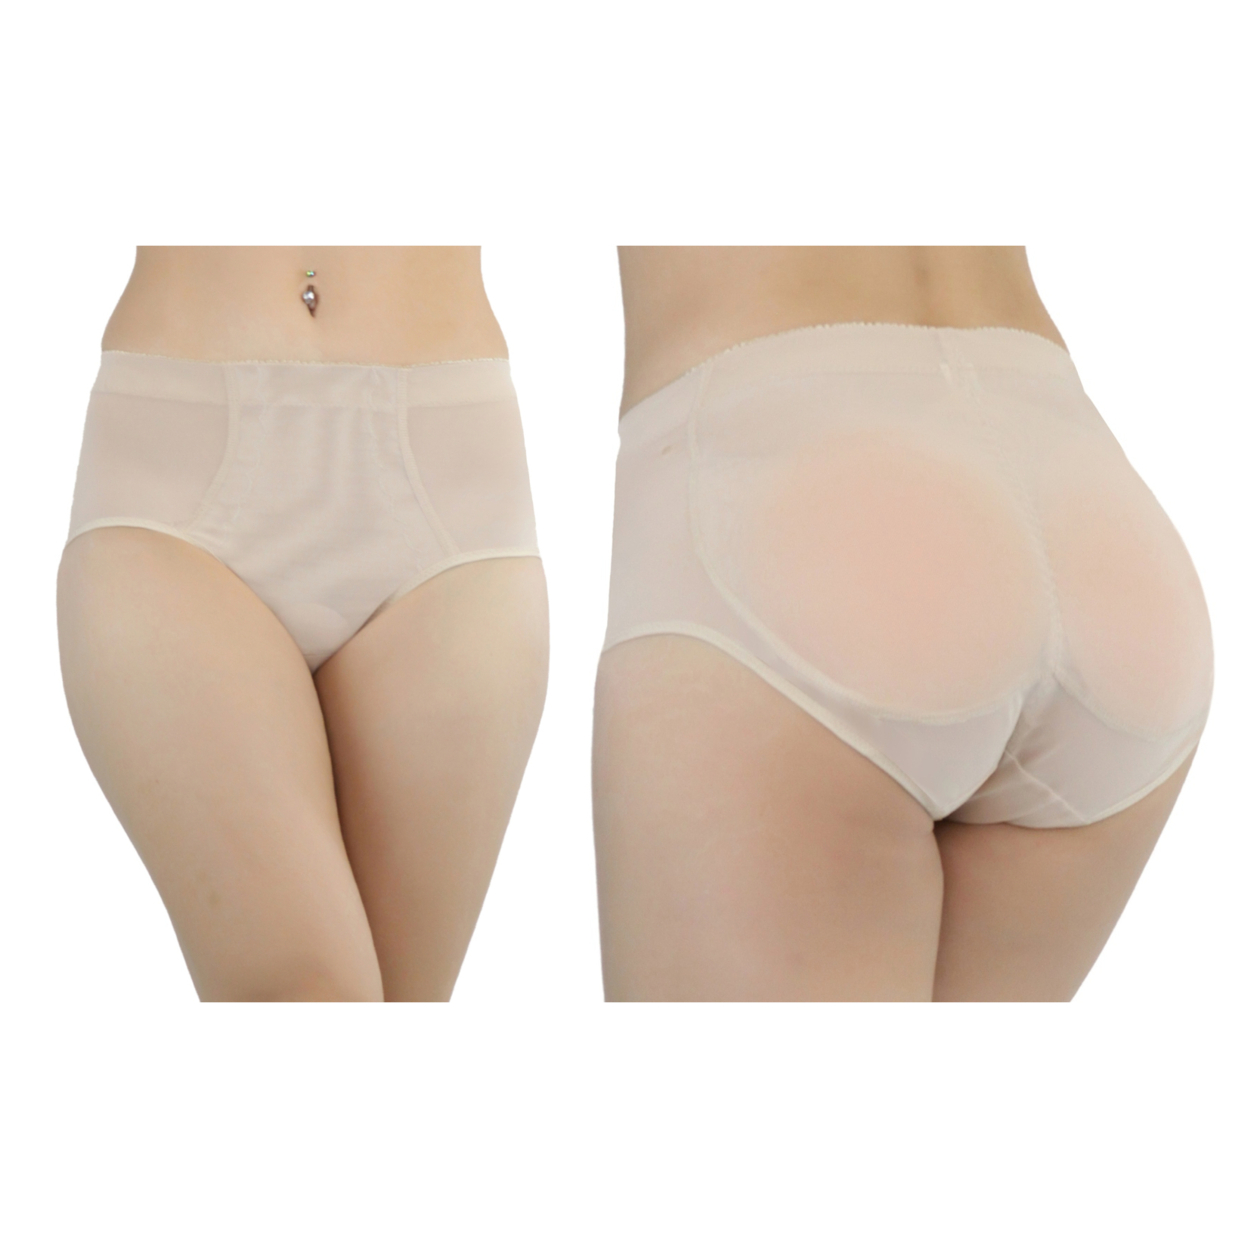 Women's Silicone Instant Buttocks Enhancer Panties - Black, XL